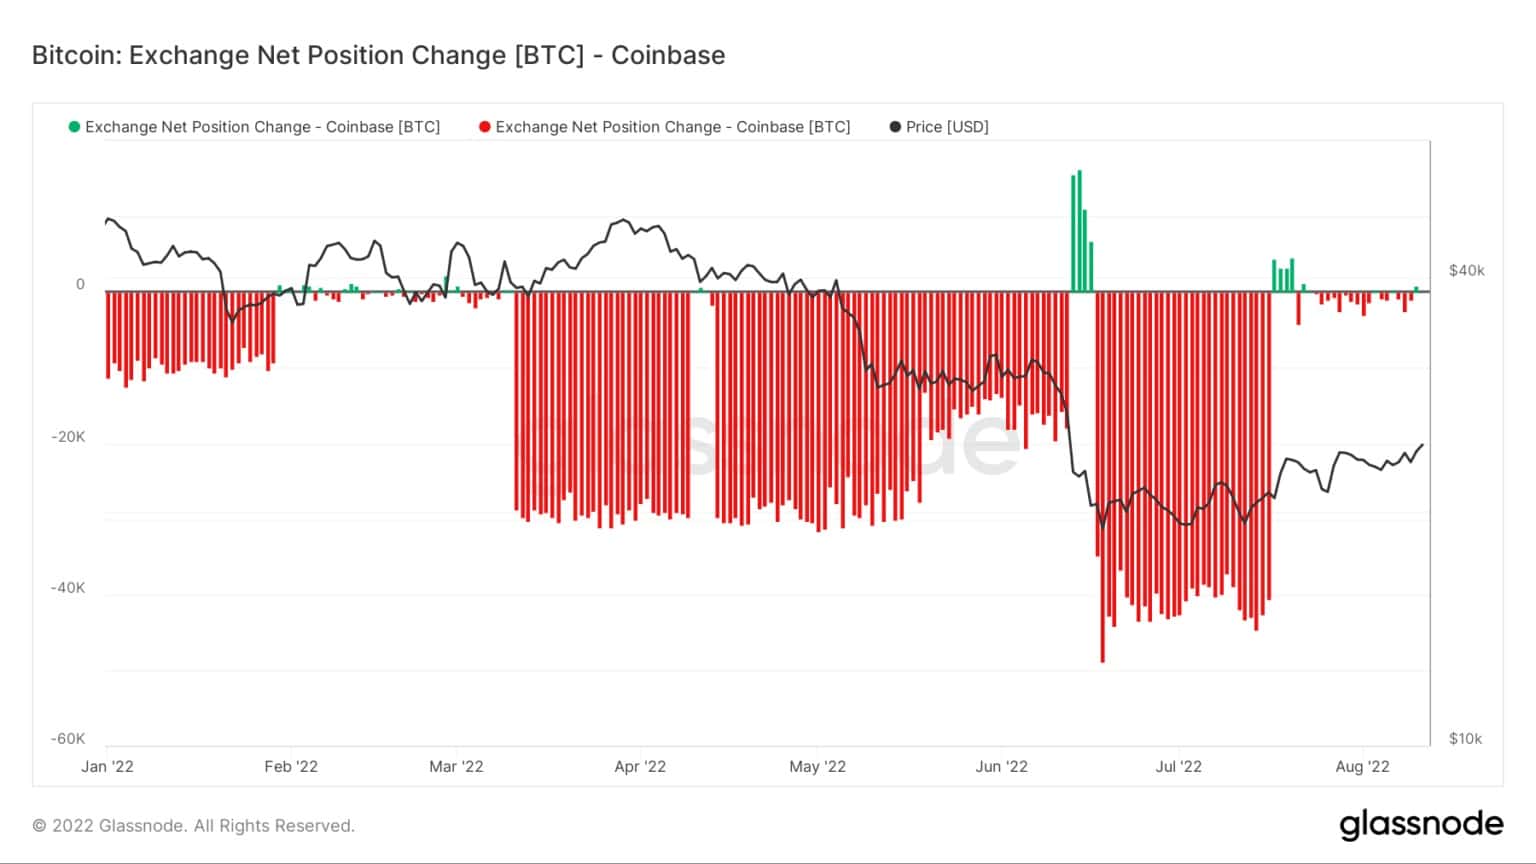 Bitcoin Exchange Net Position Change (Fonte: Glassnode)